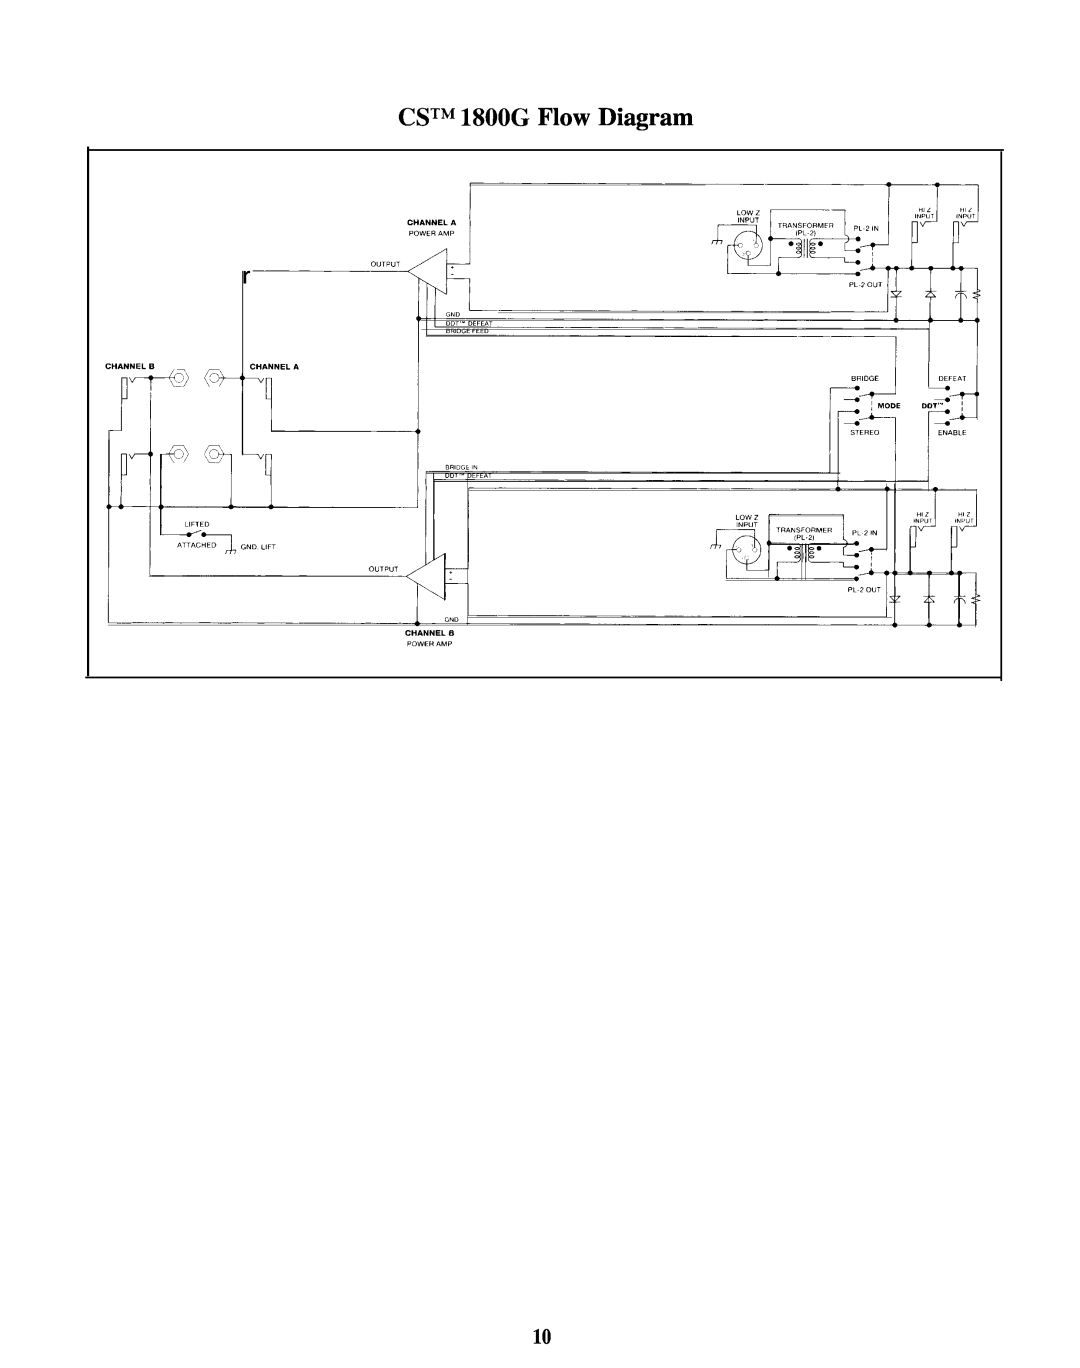 Peavey CS 1800G manual CSTM 1800G Flow Diagram 